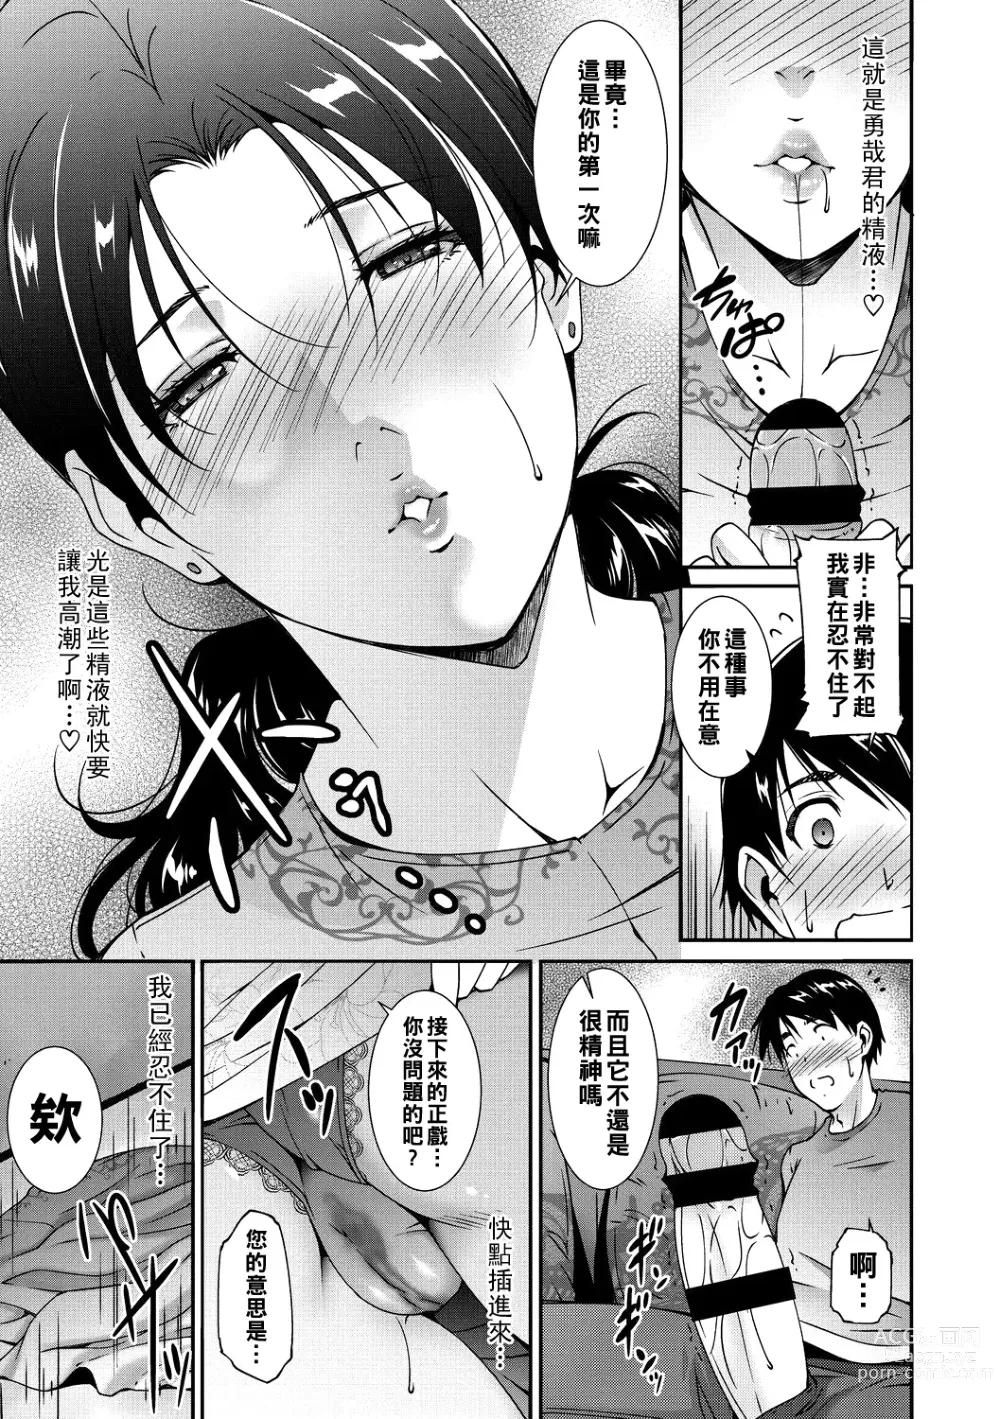 Page 11 of manga Jukubo no Enjou